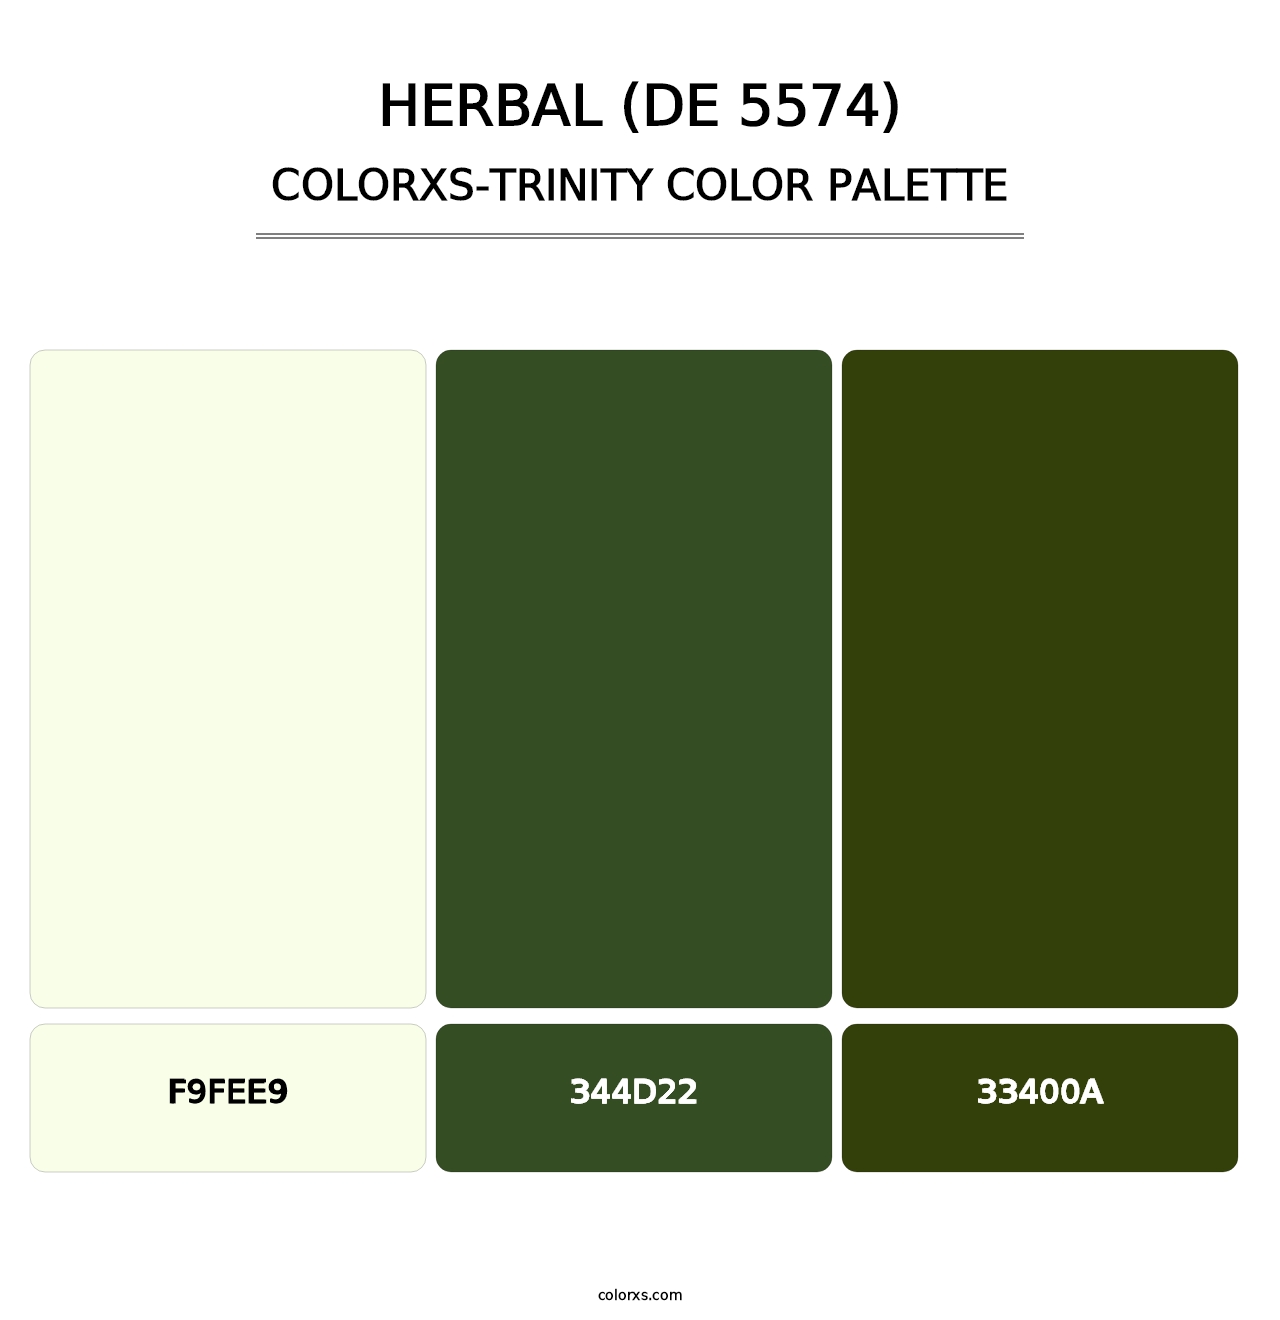 Herbal (DE 5574) - Colorxs Trinity Palette